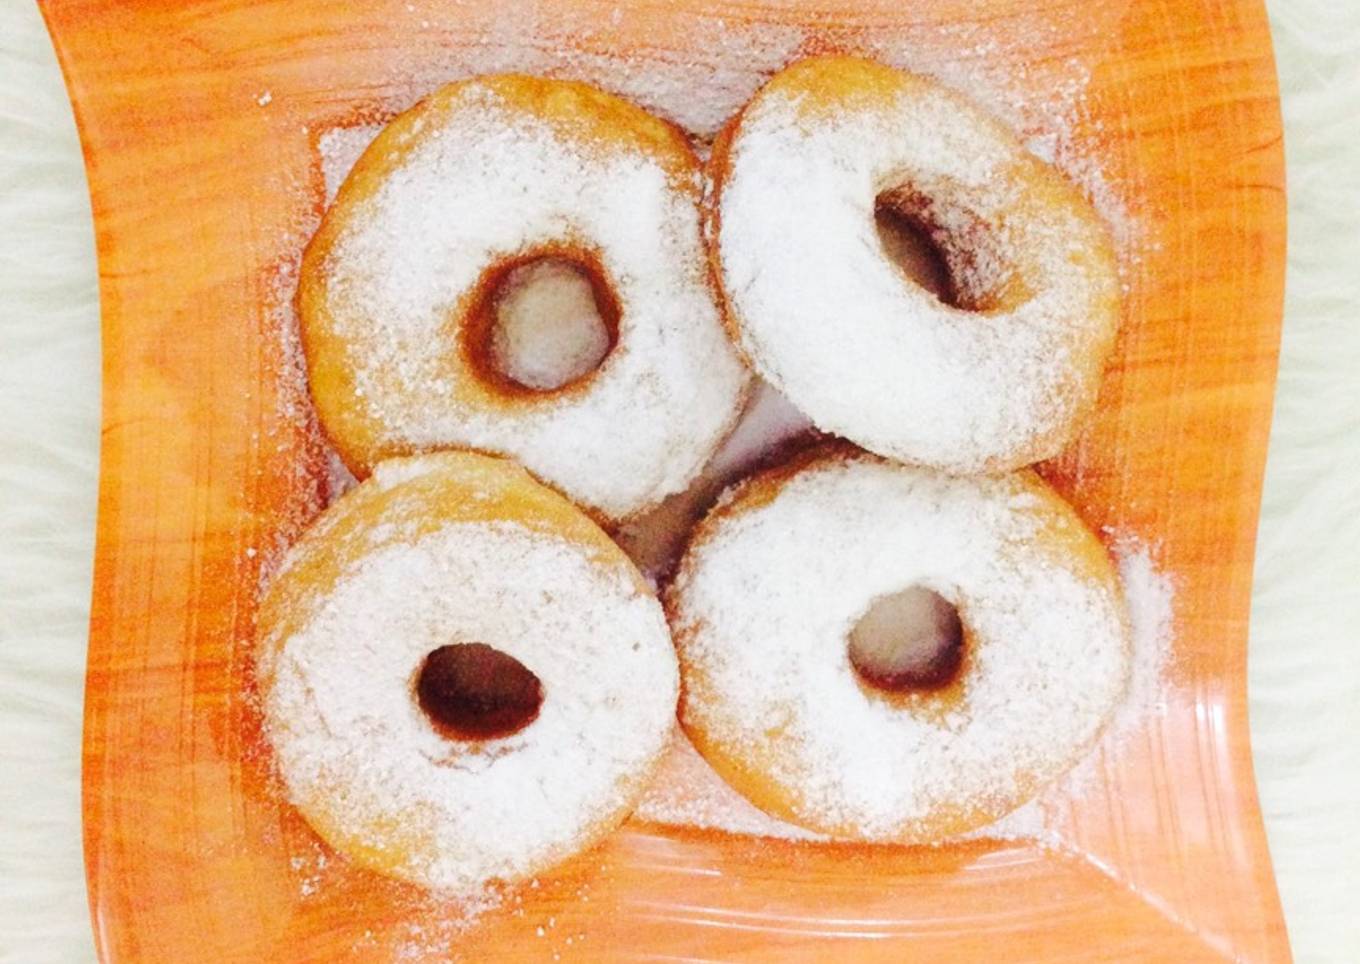 Potato donuts